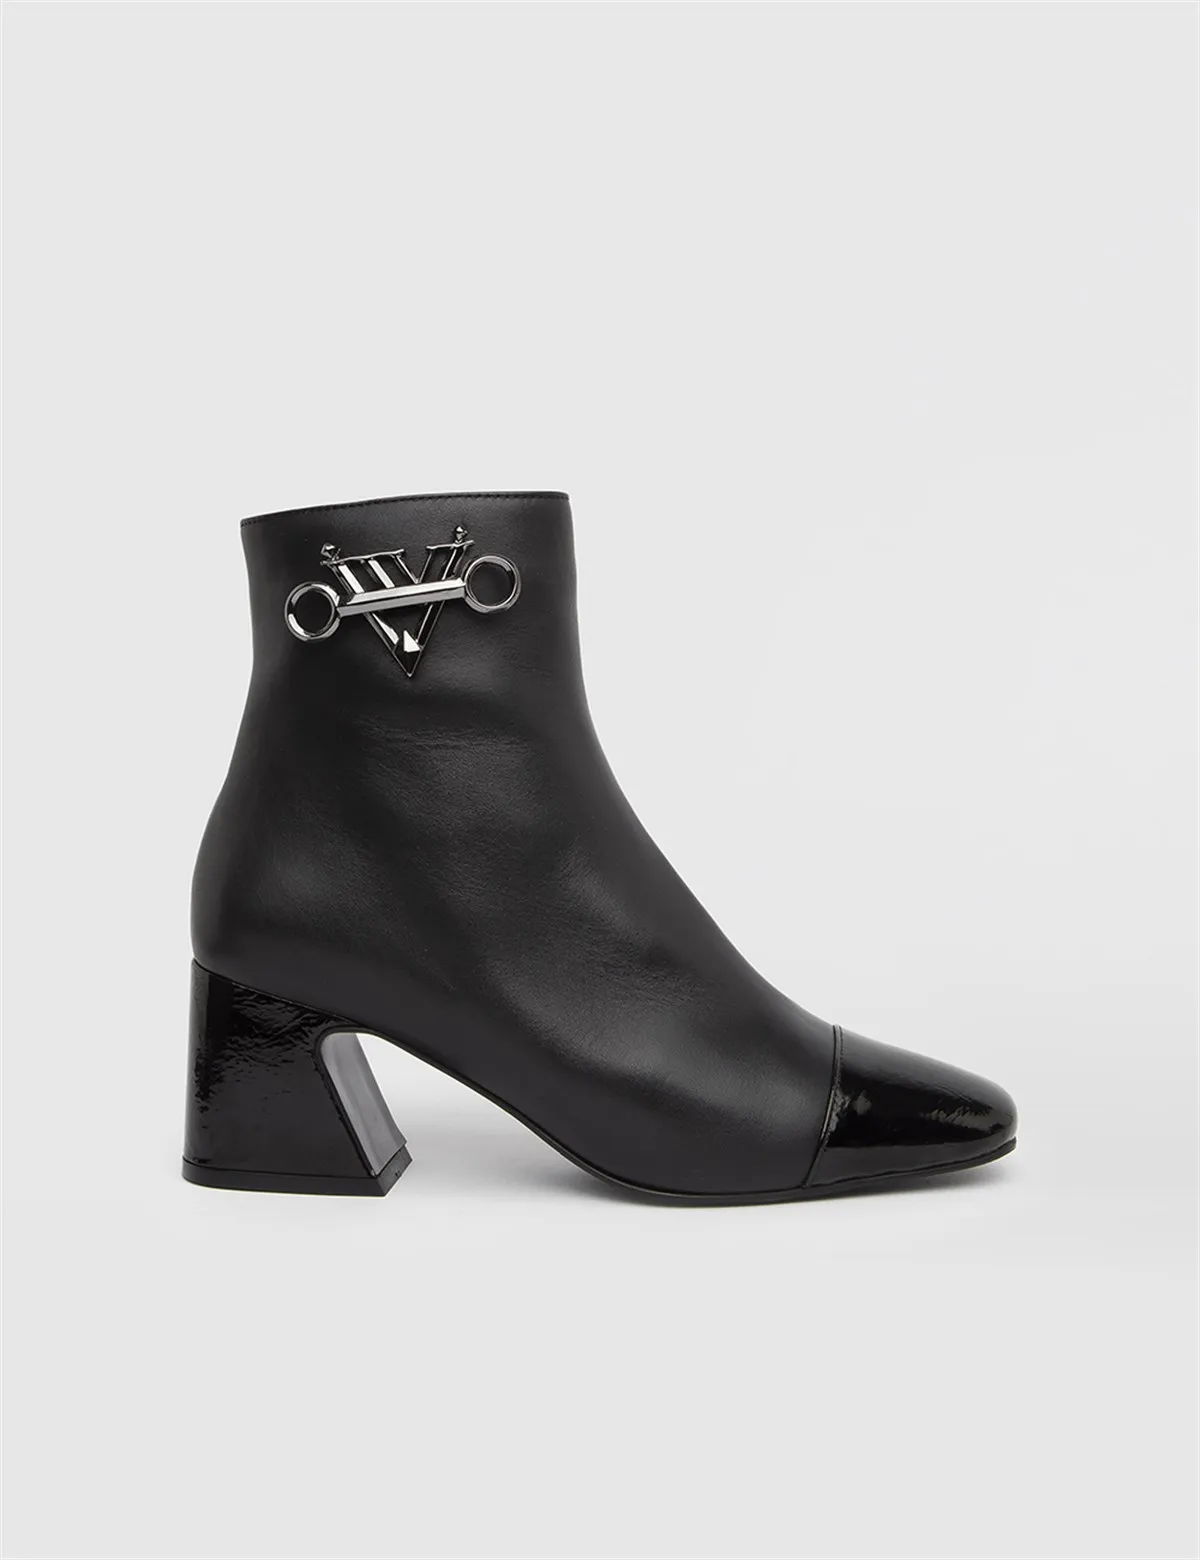 

ILVi-Genuine Leather Handmade Rogers Black Patent Heeled Boot Women's Shoes 2022 Fall/Winter